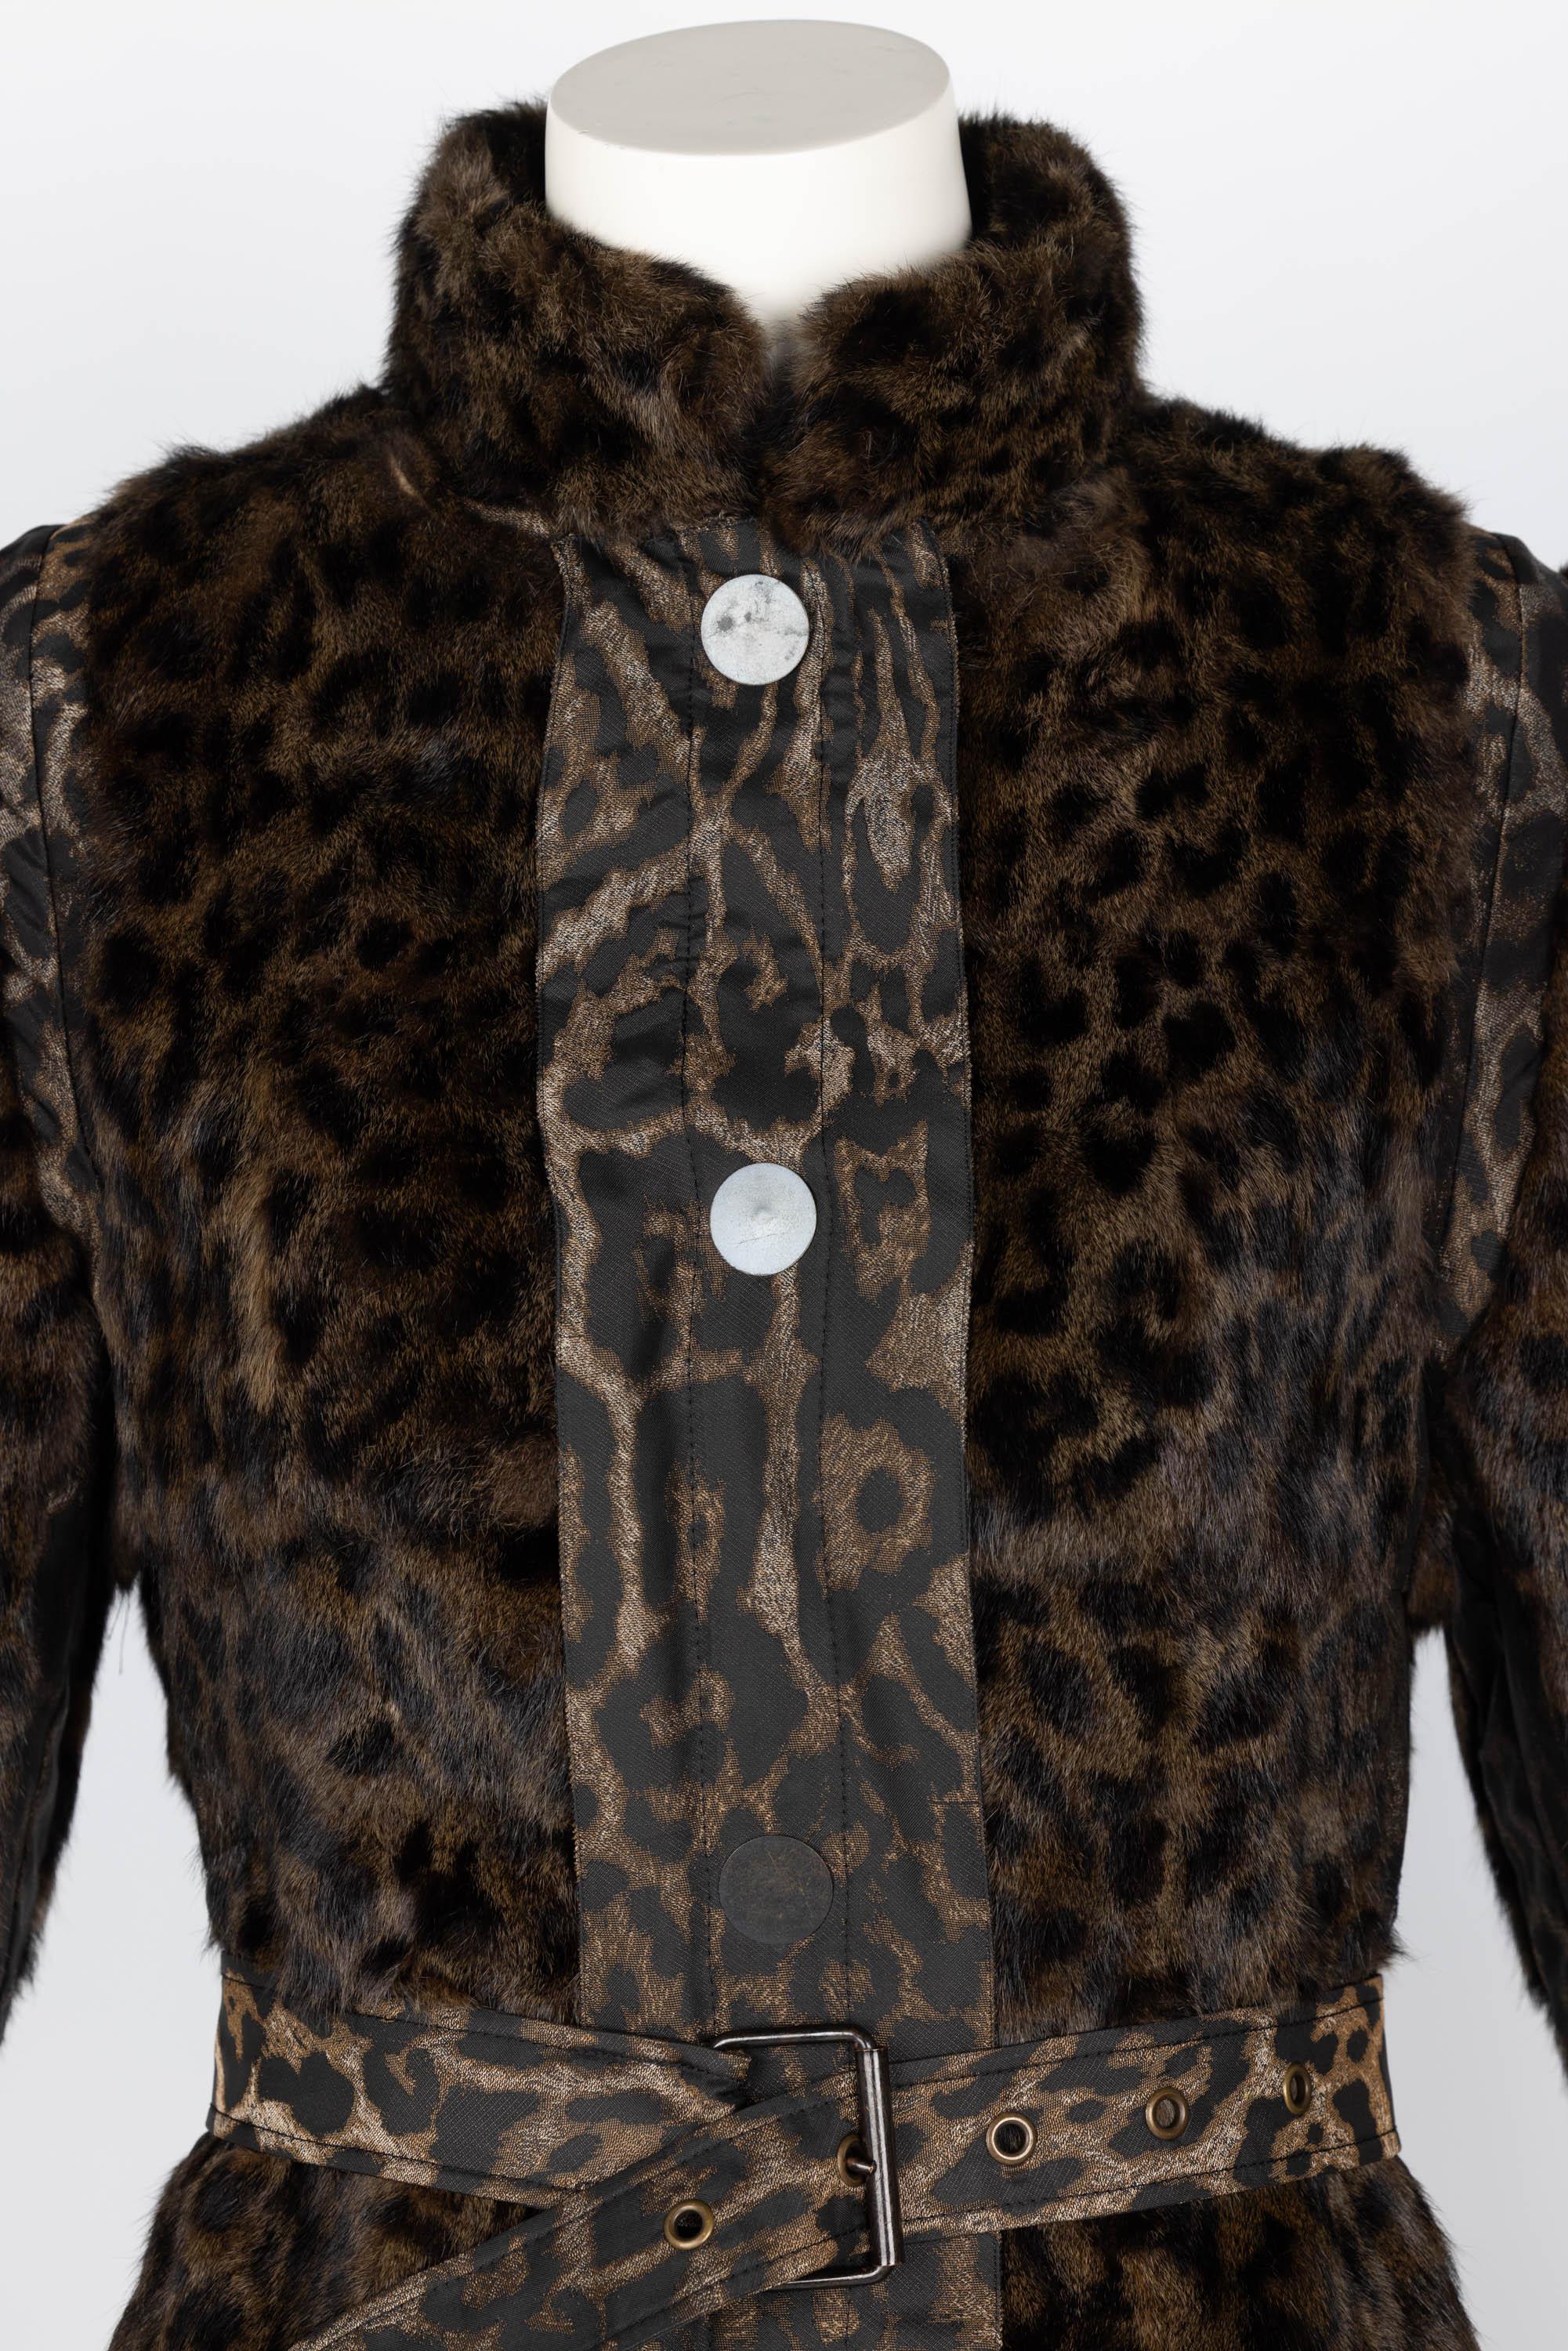 Lanvin Alber Elbaz F/W 2013 Leopard Fur & Taffeta Belted Trench Coat For Sale 6